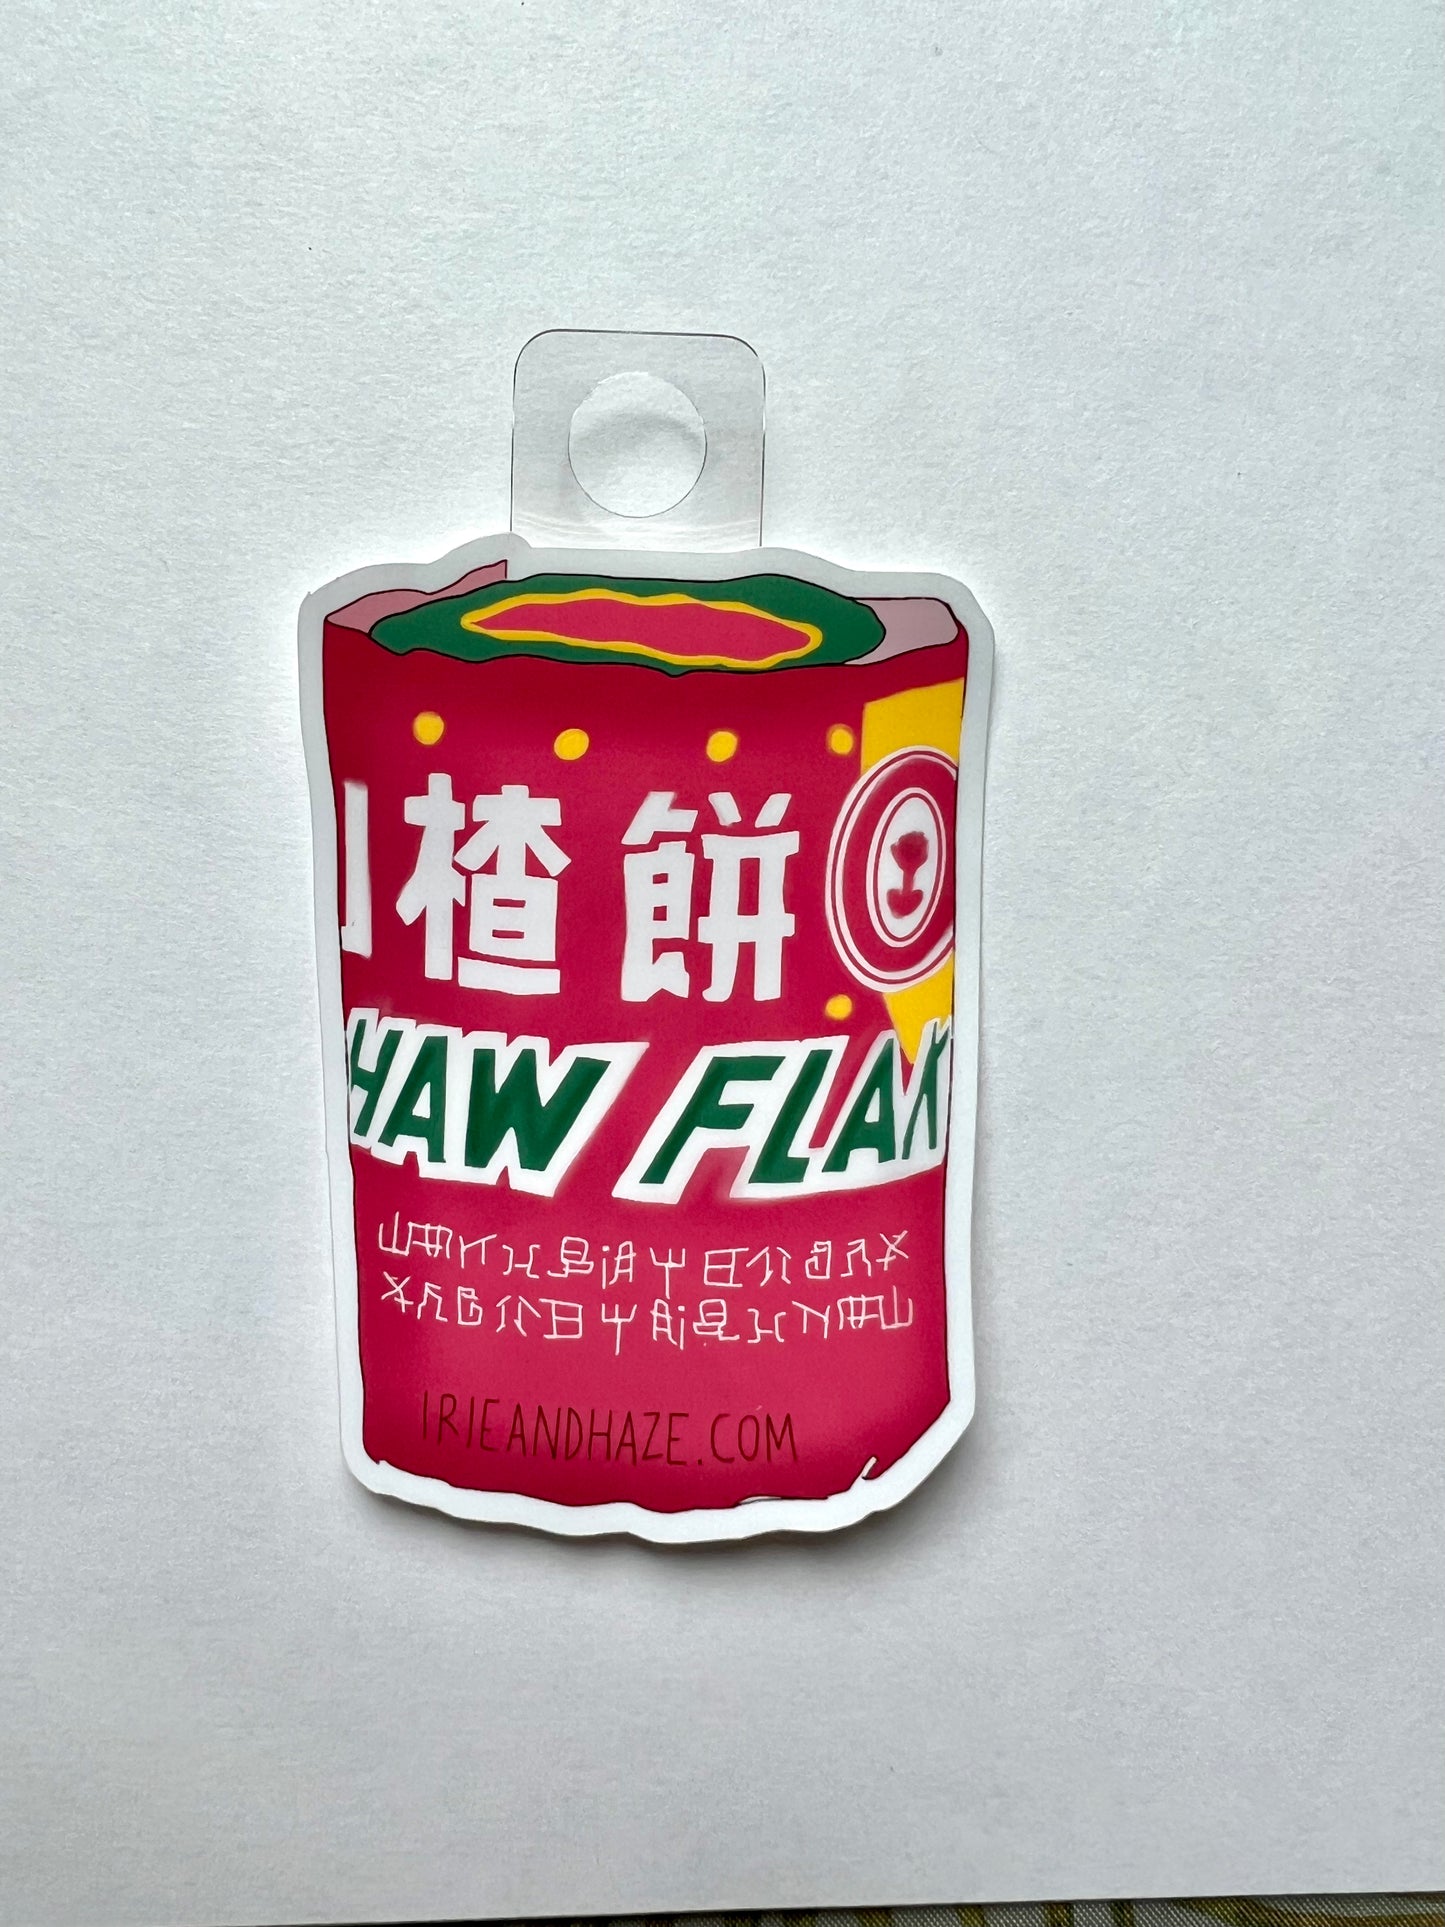 Haw Flakes sticker